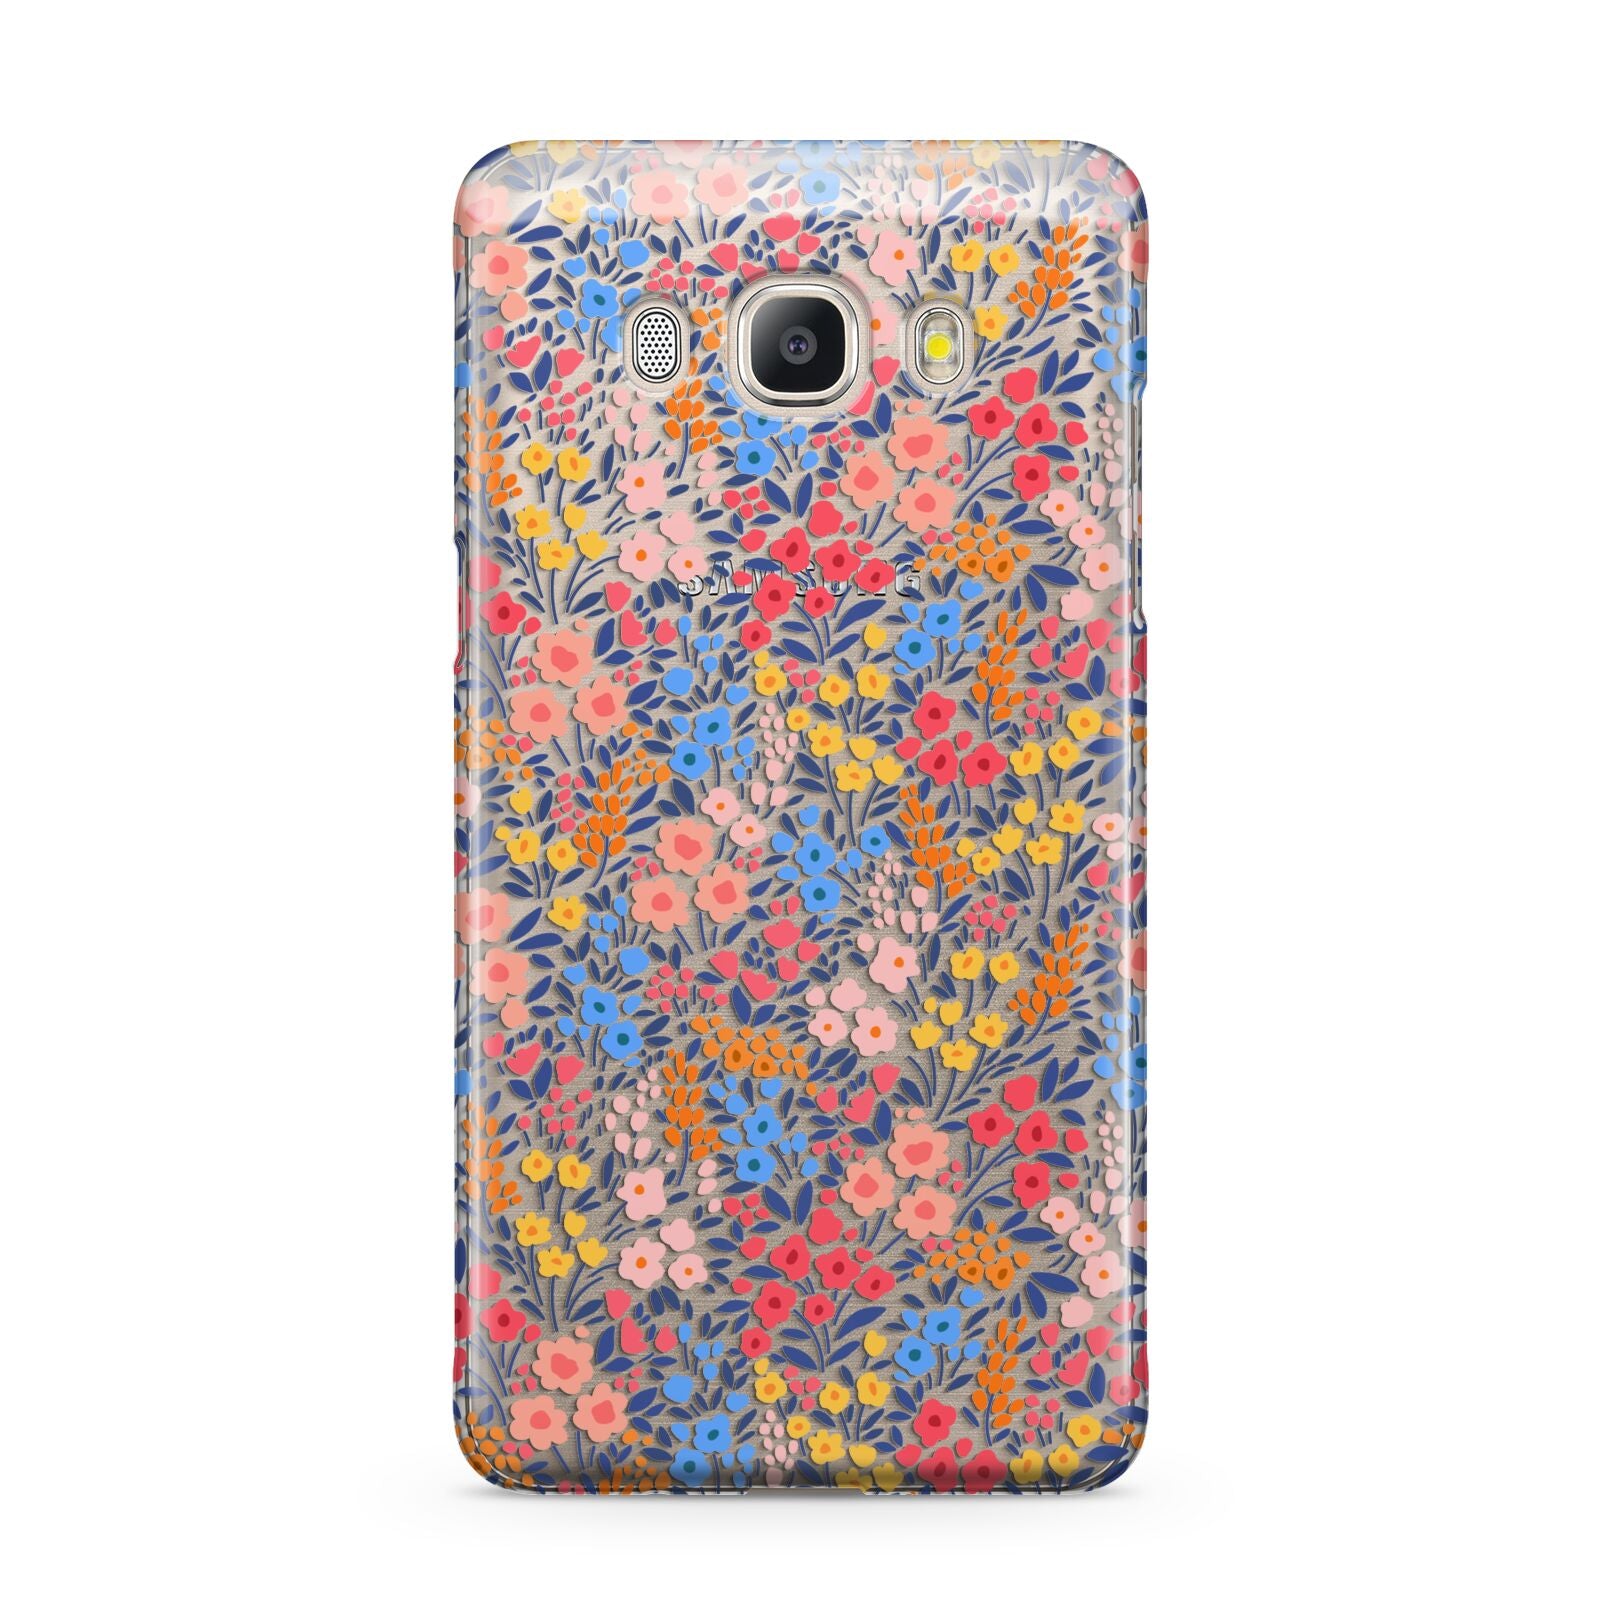 Small Flowers Samsung Galaxy J5 2016 Case